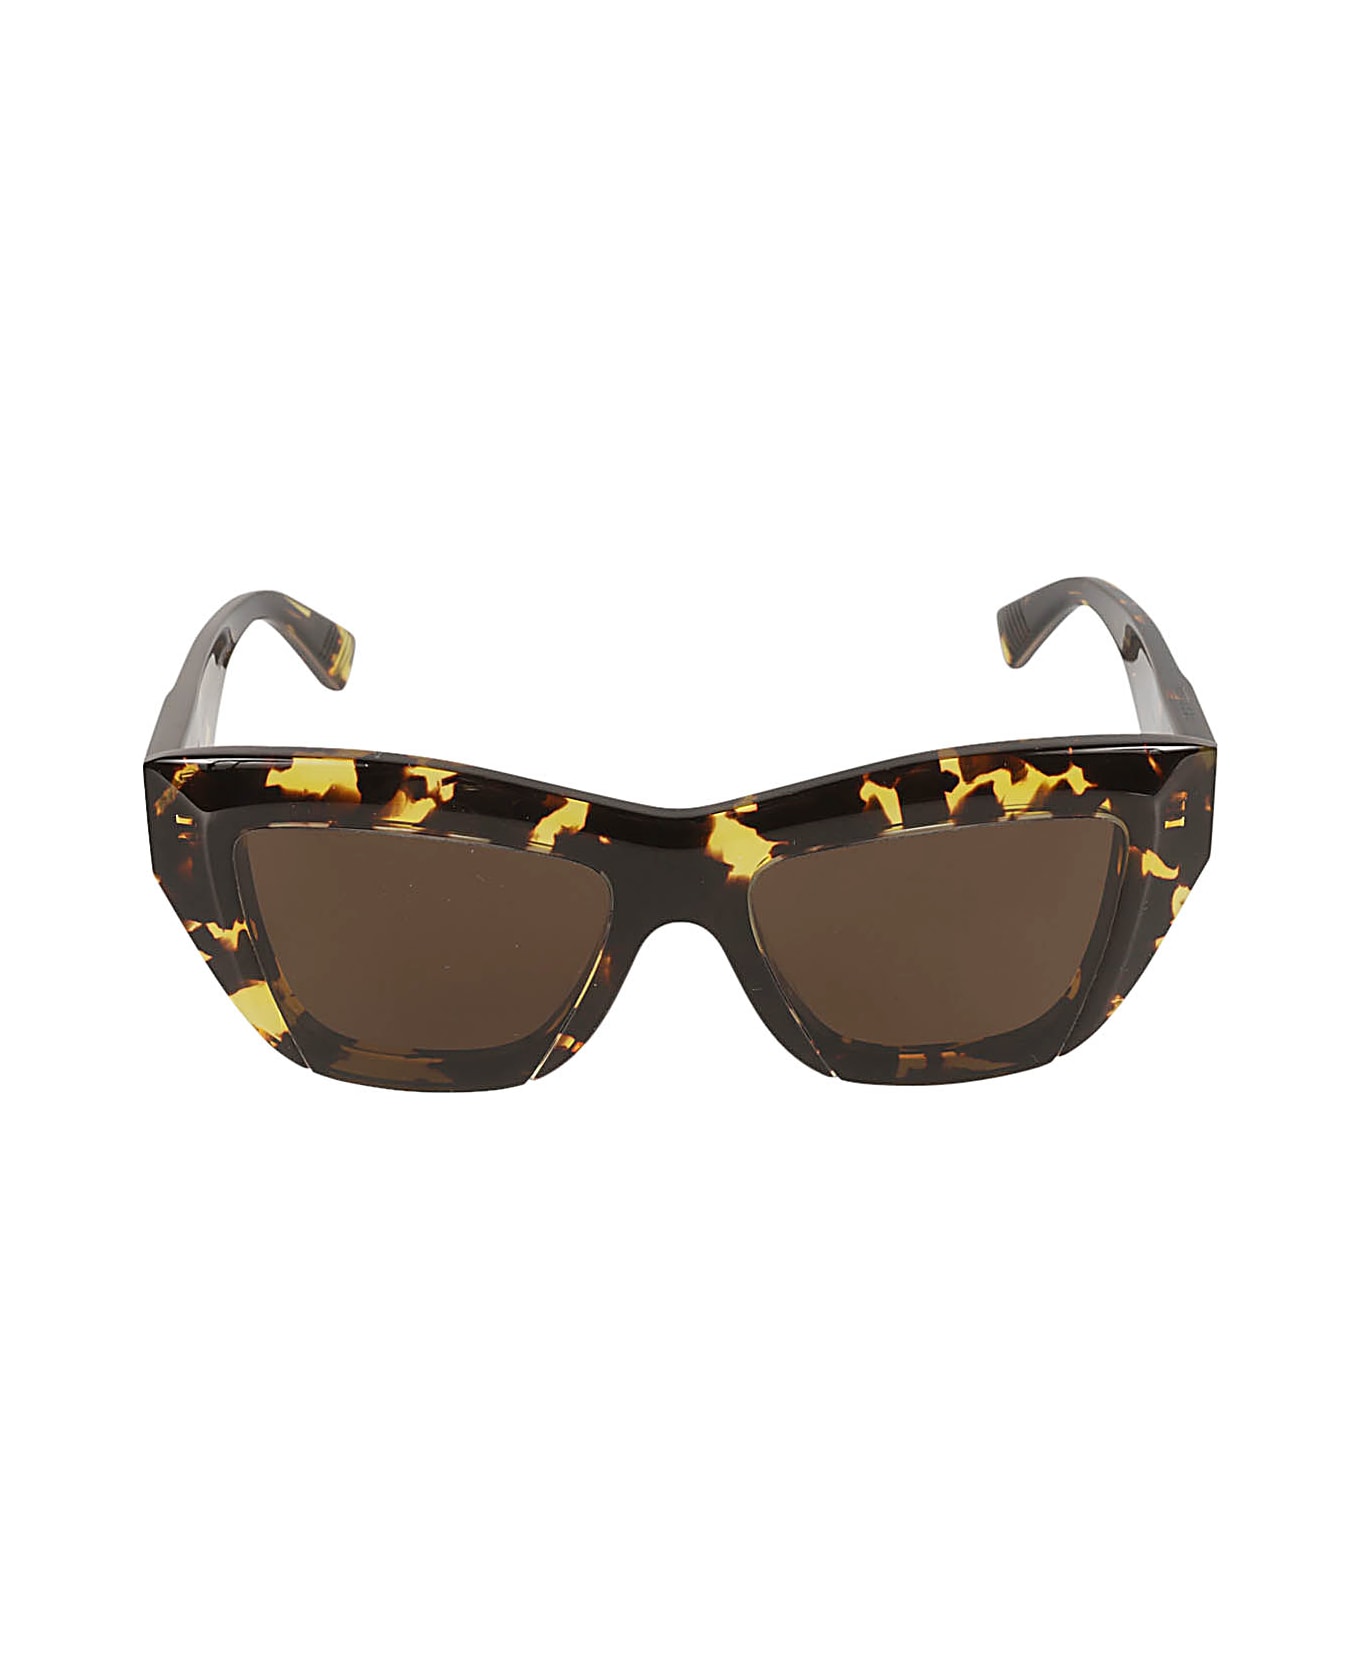 Bottega Veneta Eyewear Square Frame Flame Effect Sunglasses - Havana/Brown サングラス